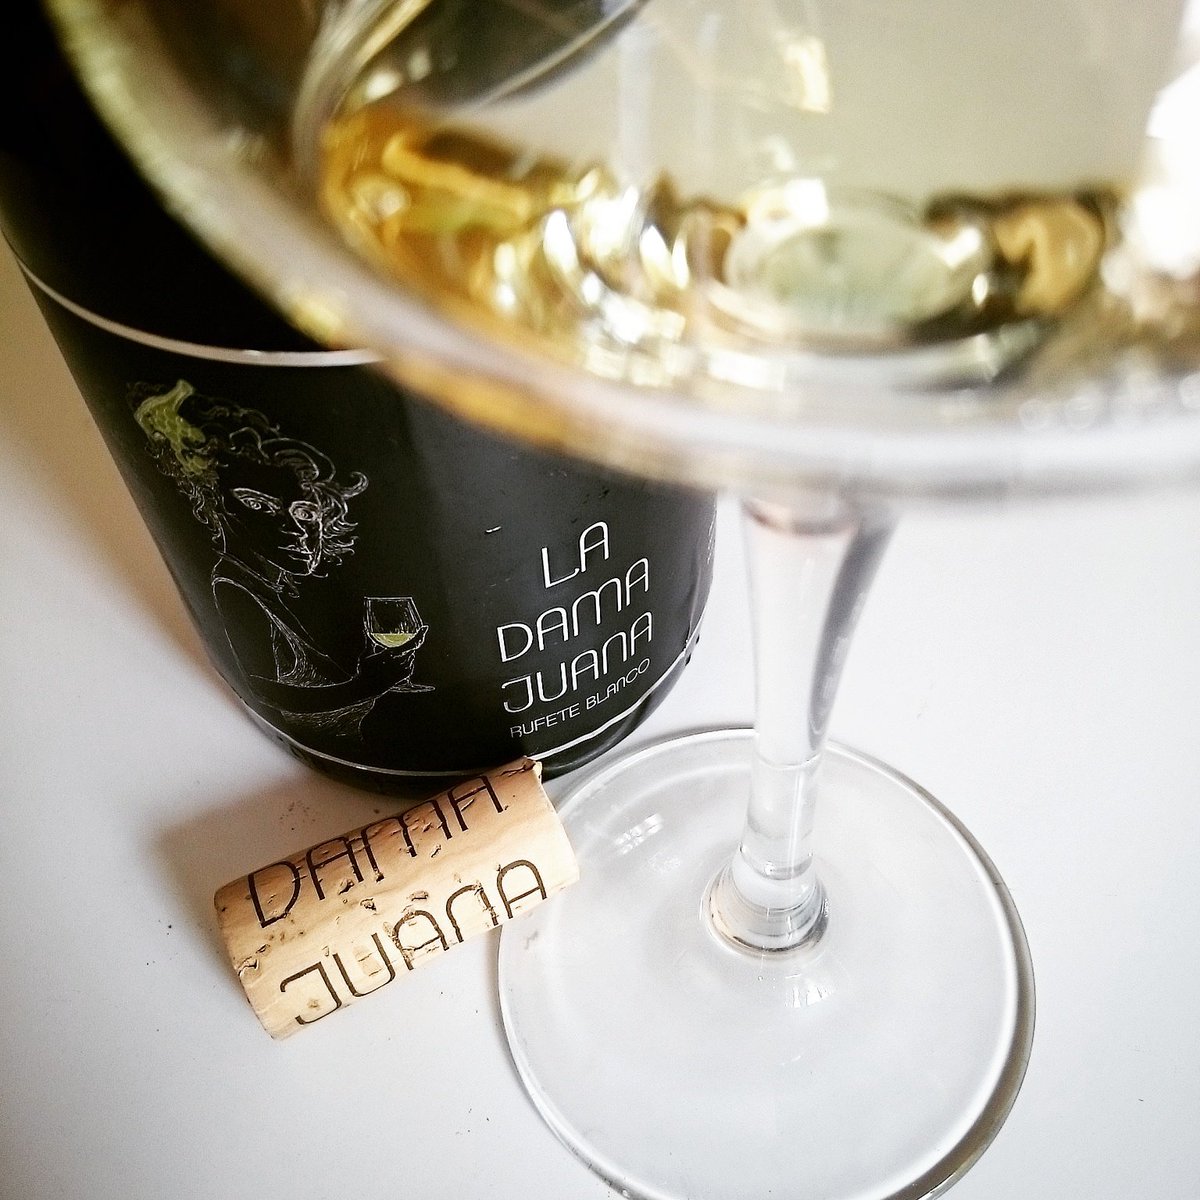 Damajuana 2013 Rufete Blanco 100% a gem that confirms #Sierradesalamanca as an outstanding wine region #Spain #wine